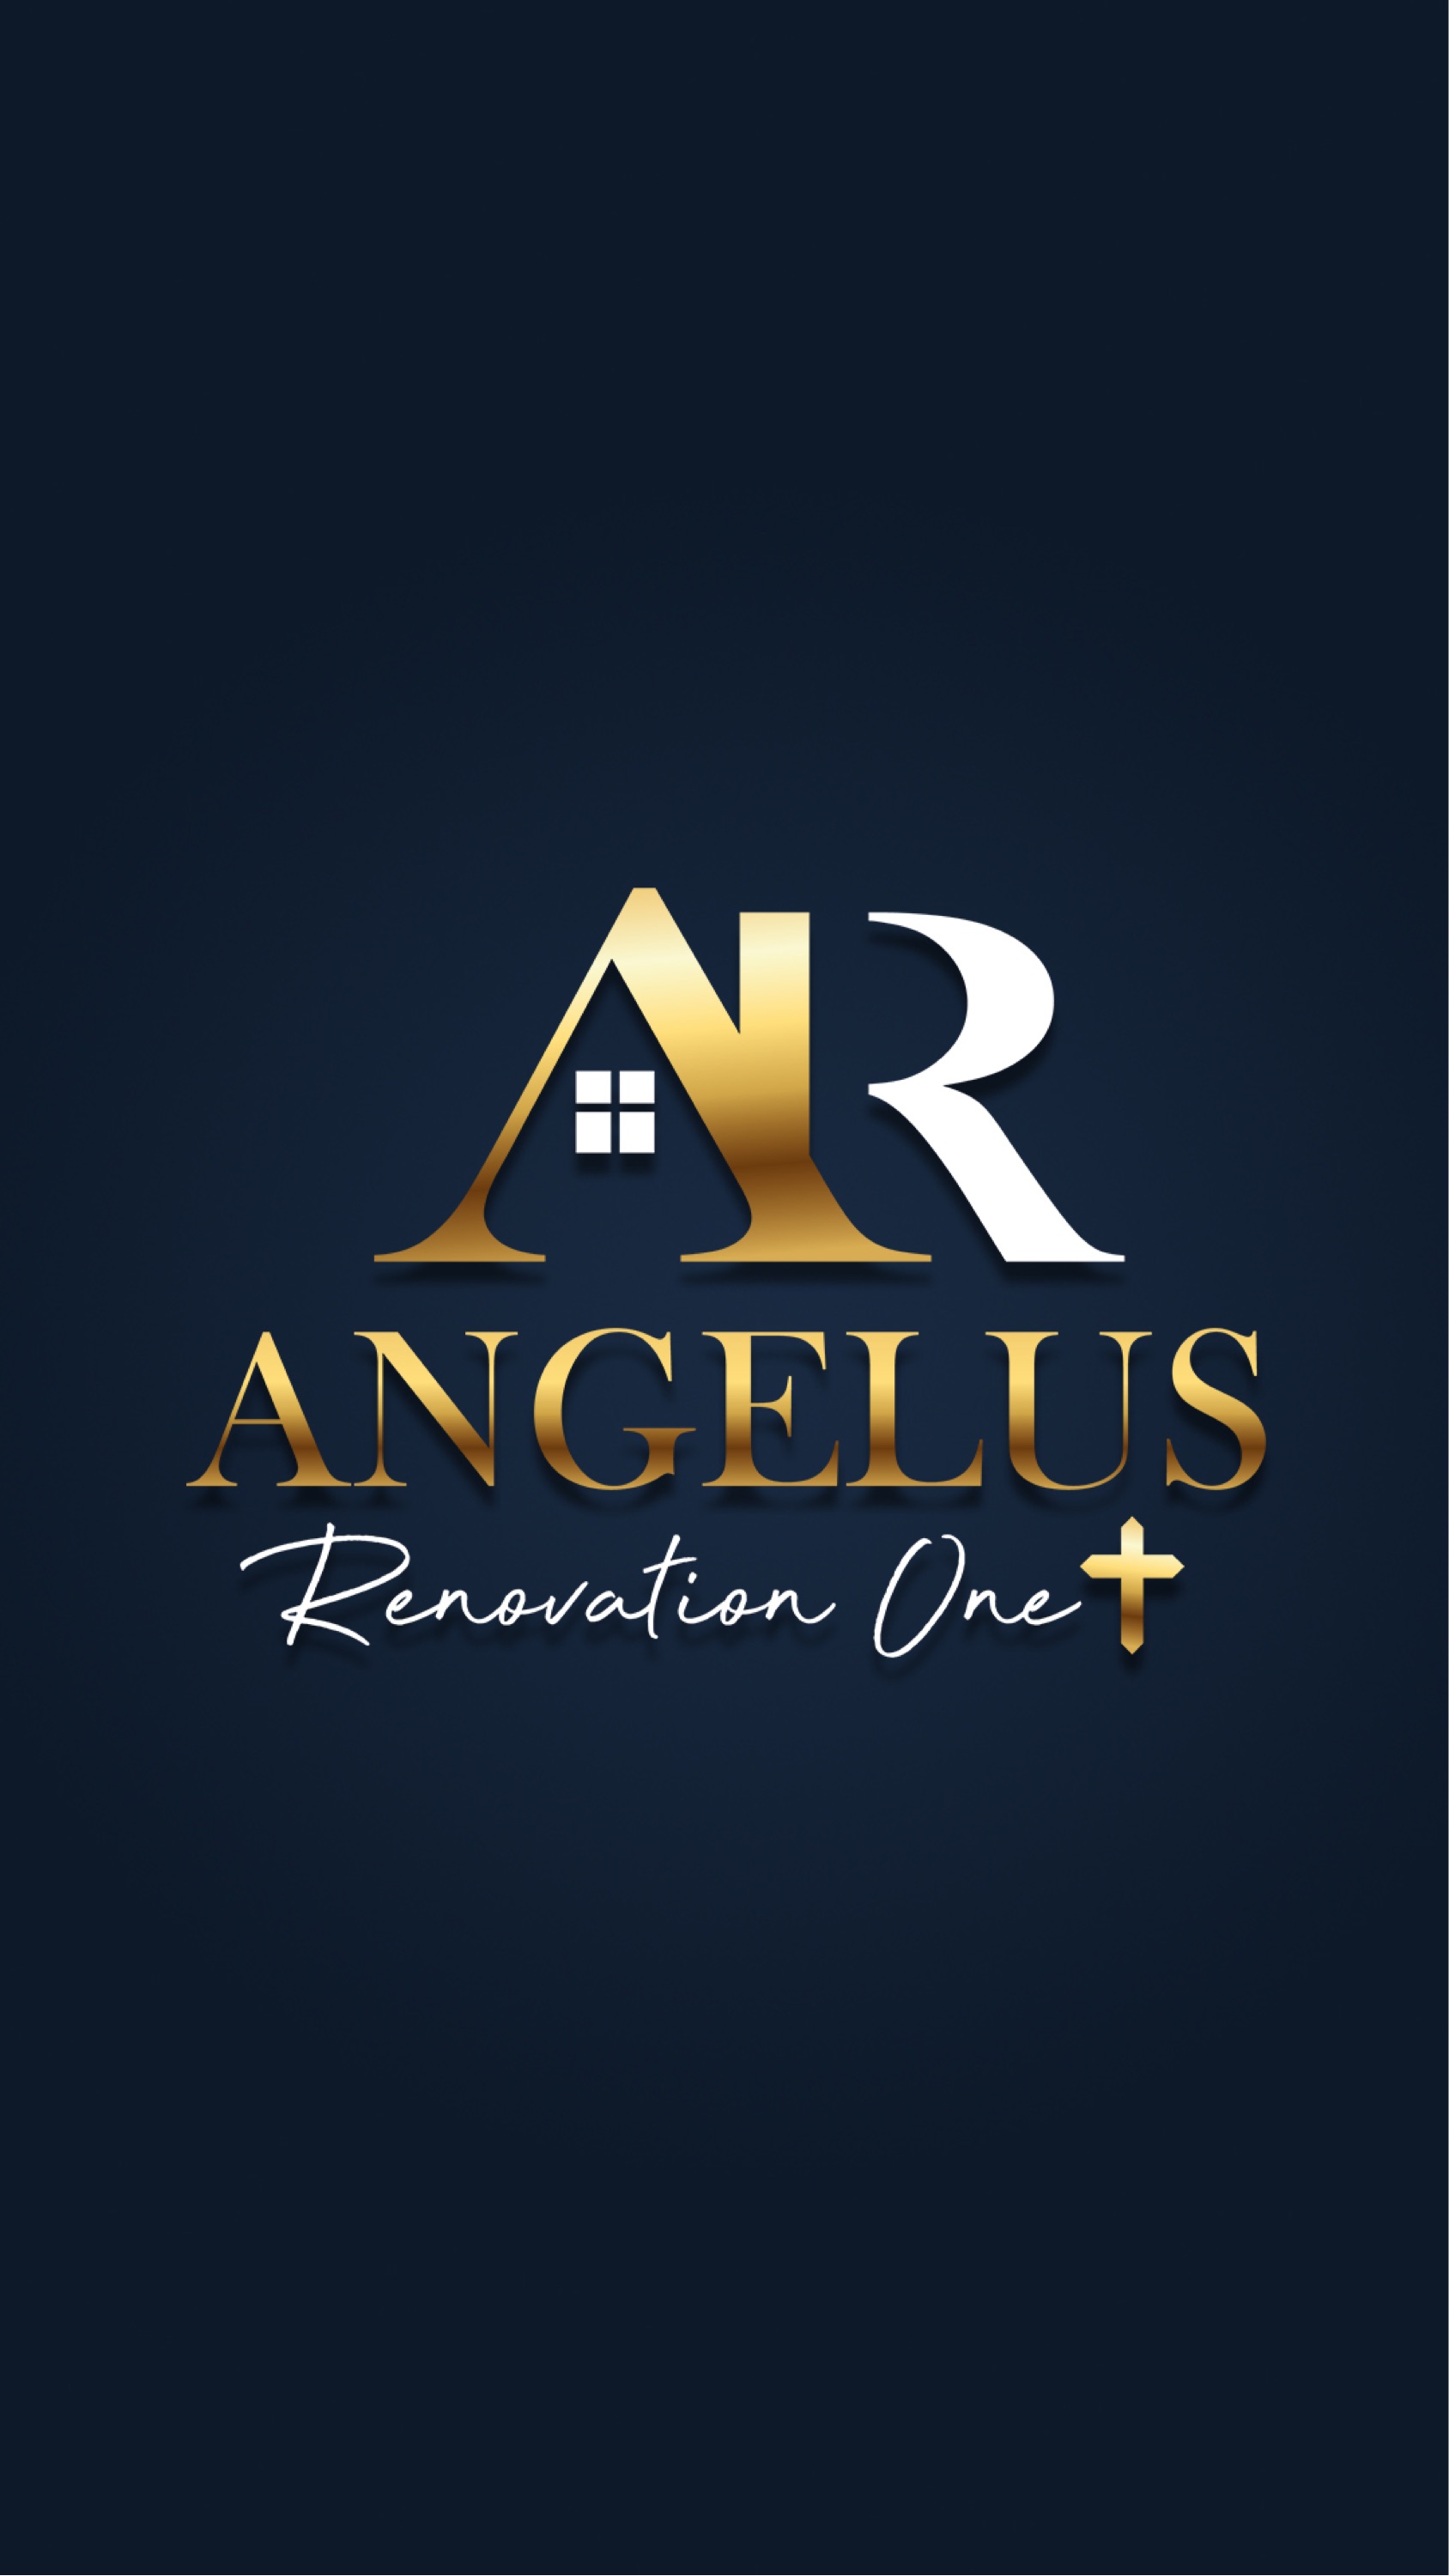 Angelus Renovation One Logo